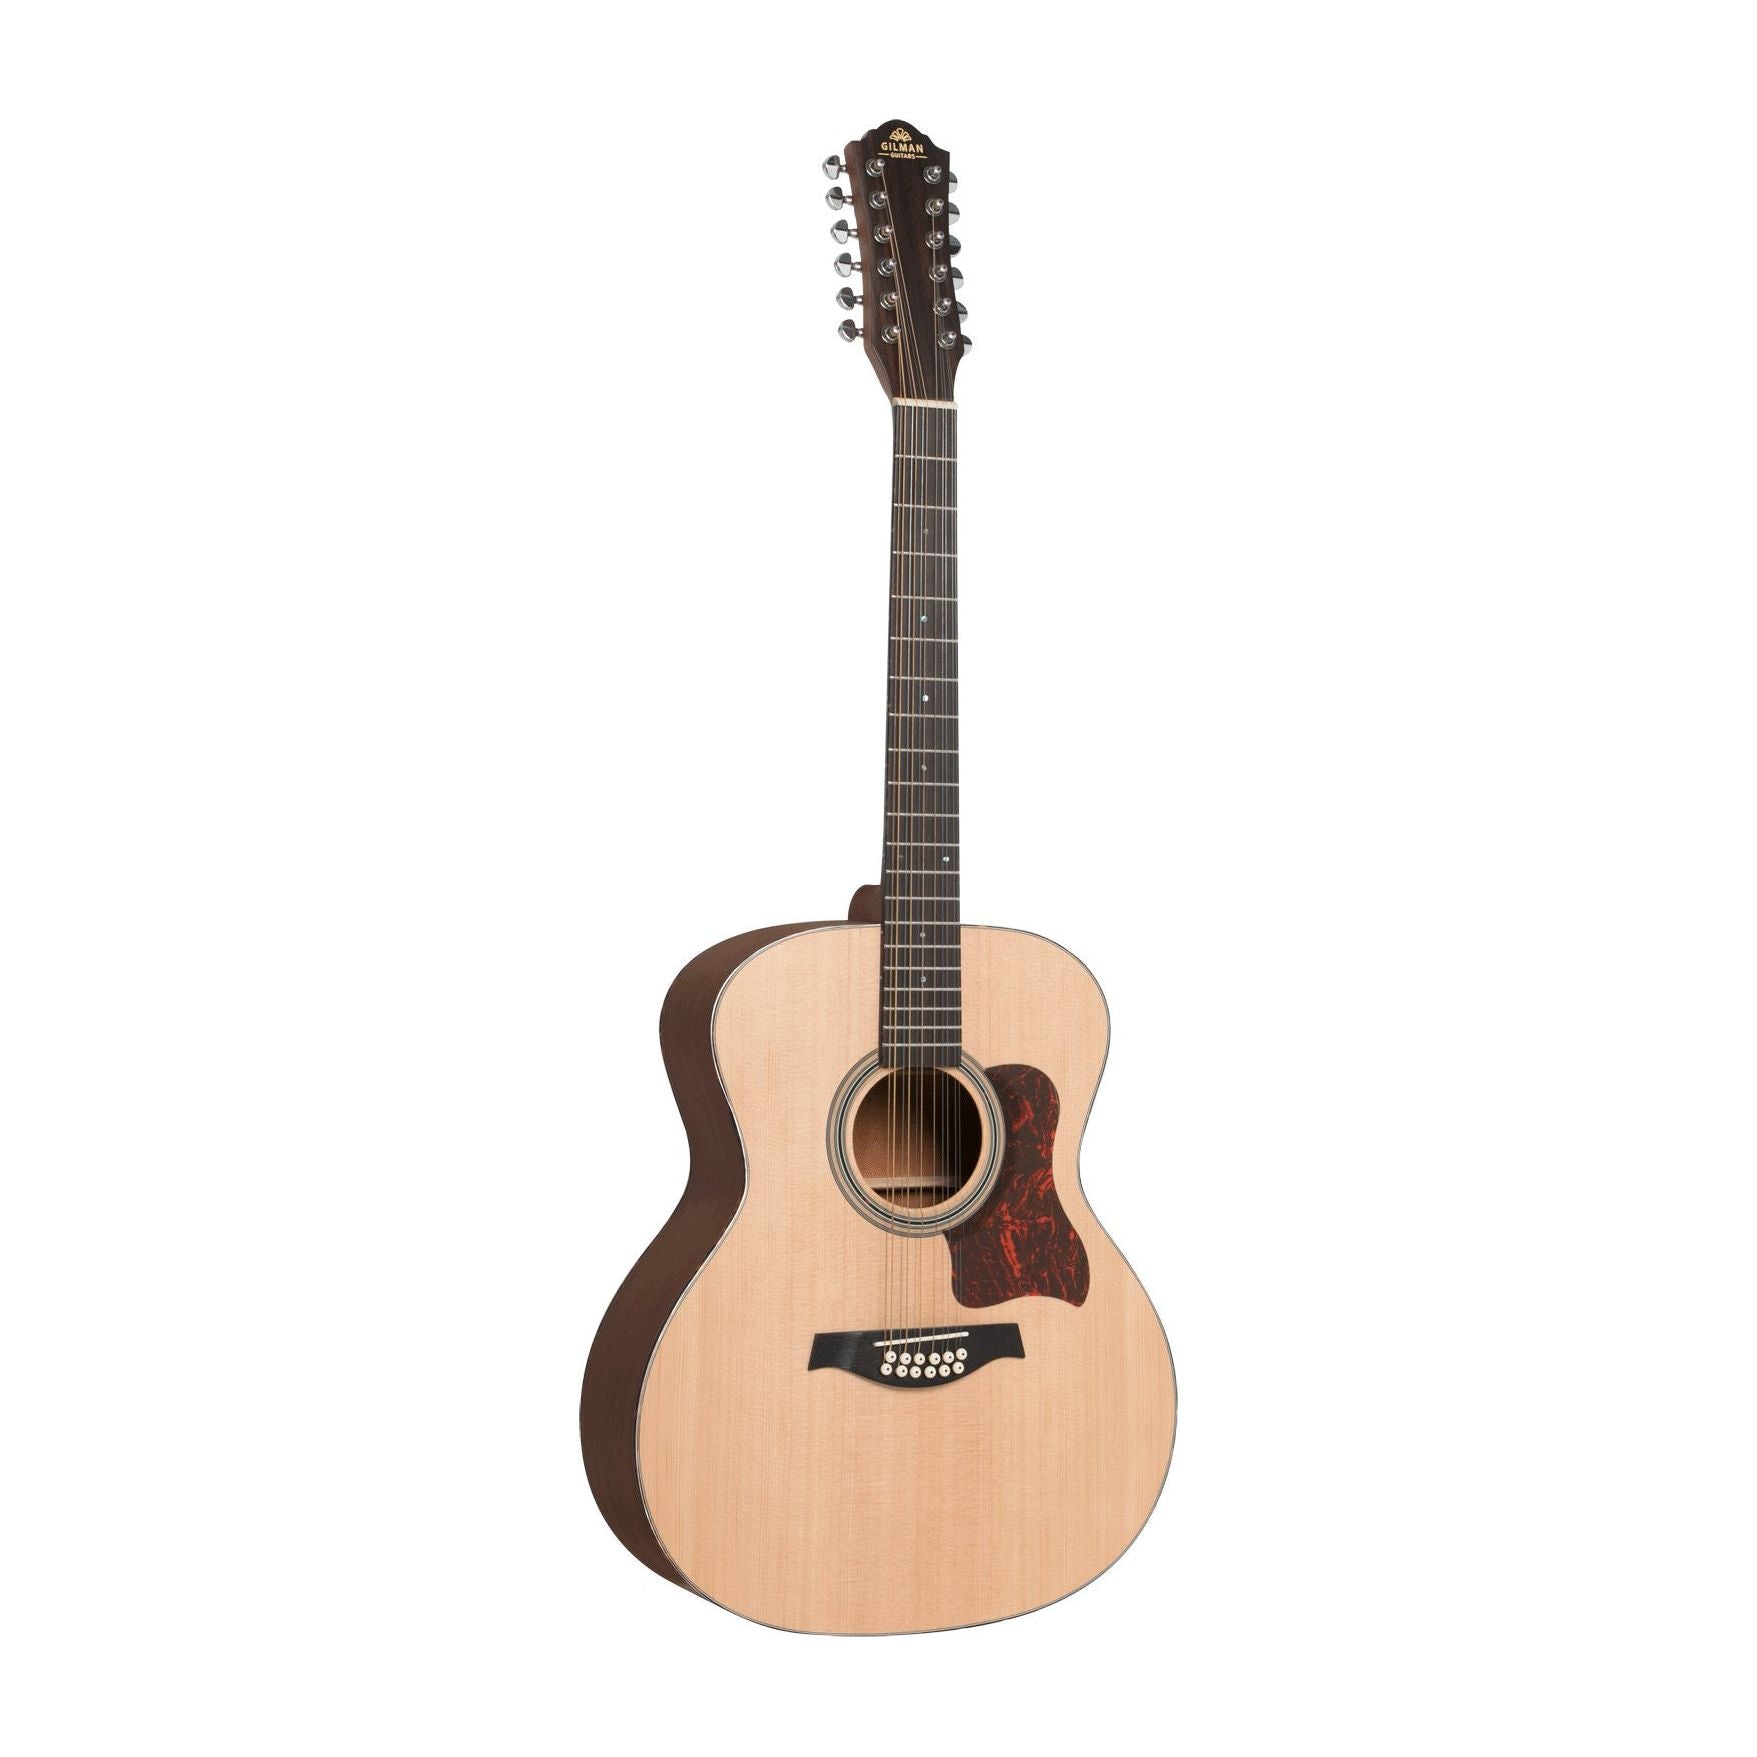 Gilman GA112 12 string Acoustic